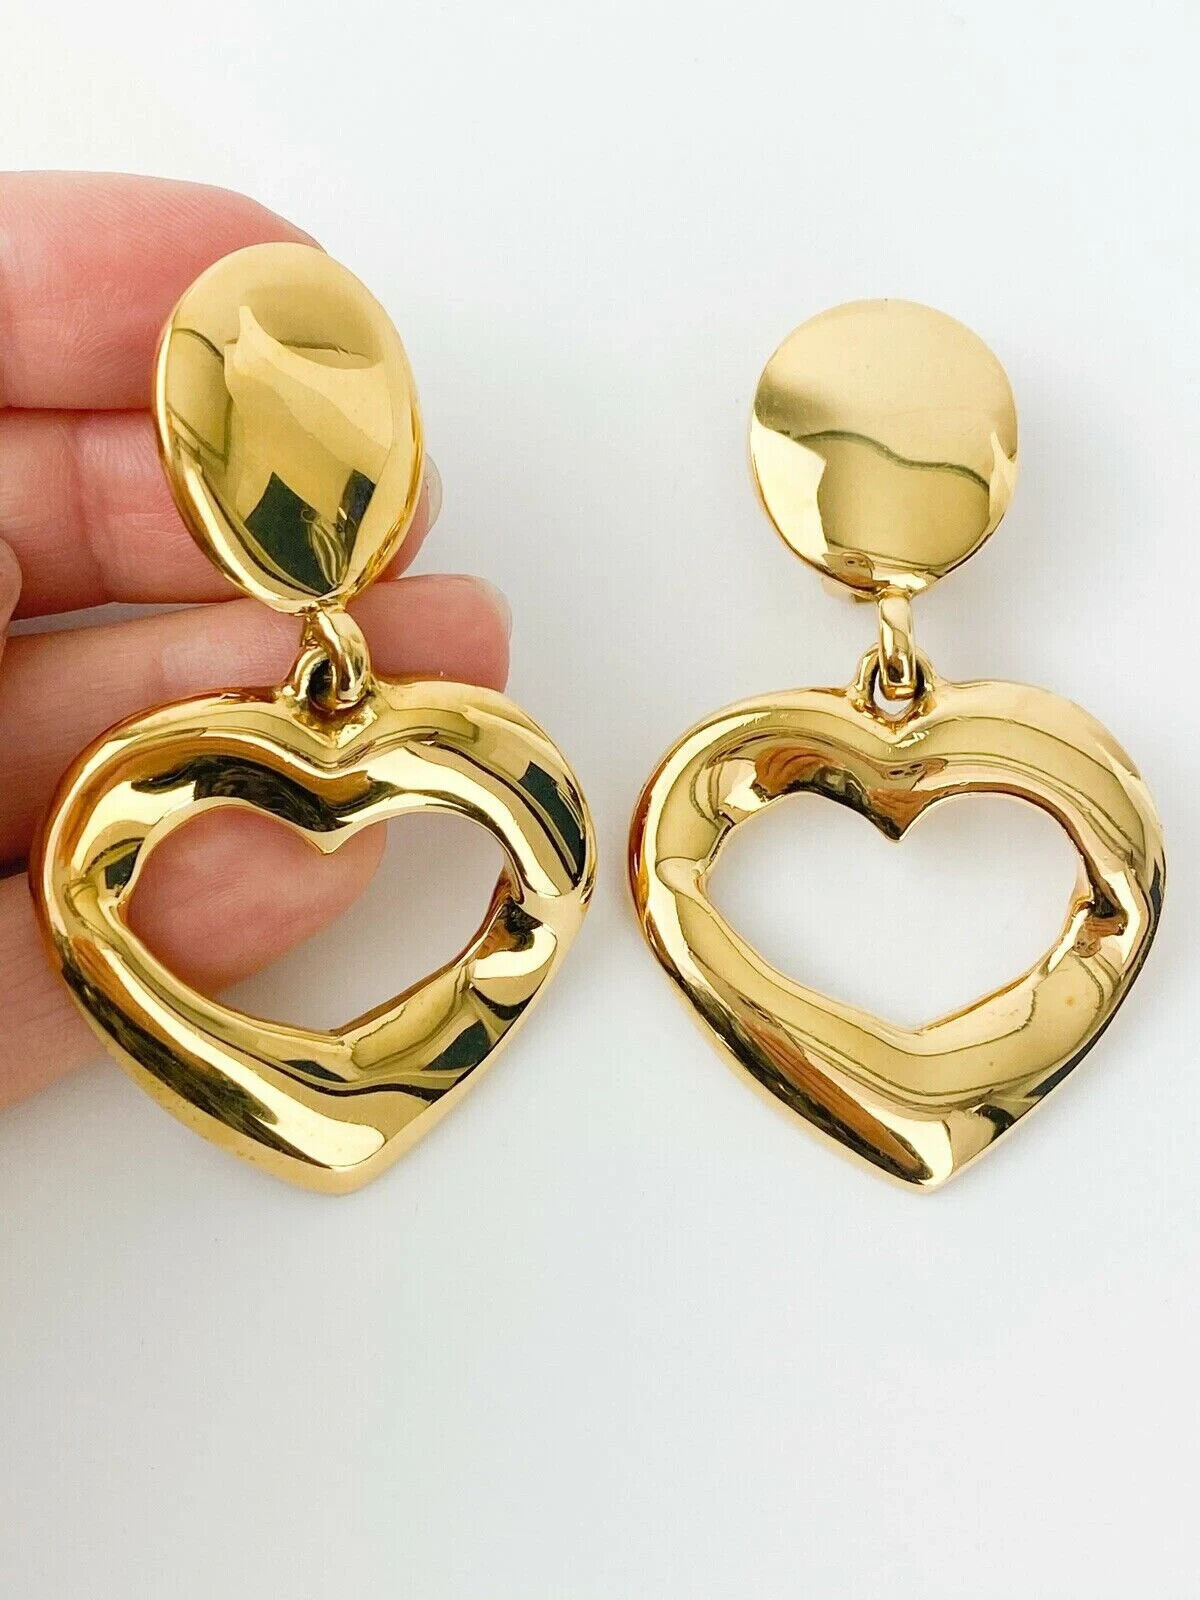 Yves Saint Laurent Heart Earrings  1990’s YSL Earrings Vintage Gold Tone Heart Openwork Earrings, Earrings Large, YSL Original Box Cards